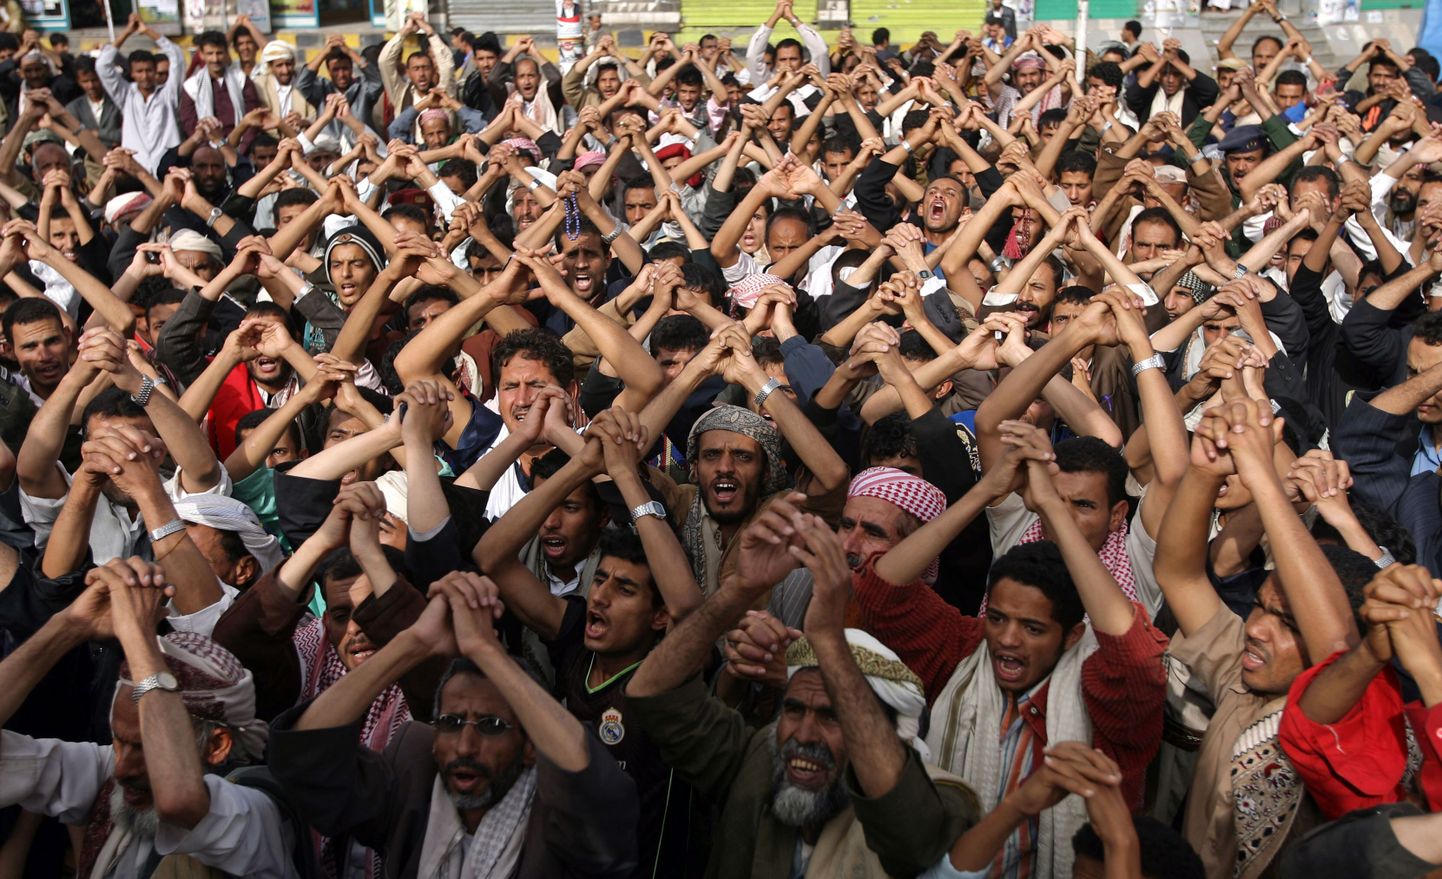 Valitsusvastased jeemenlased protestimas